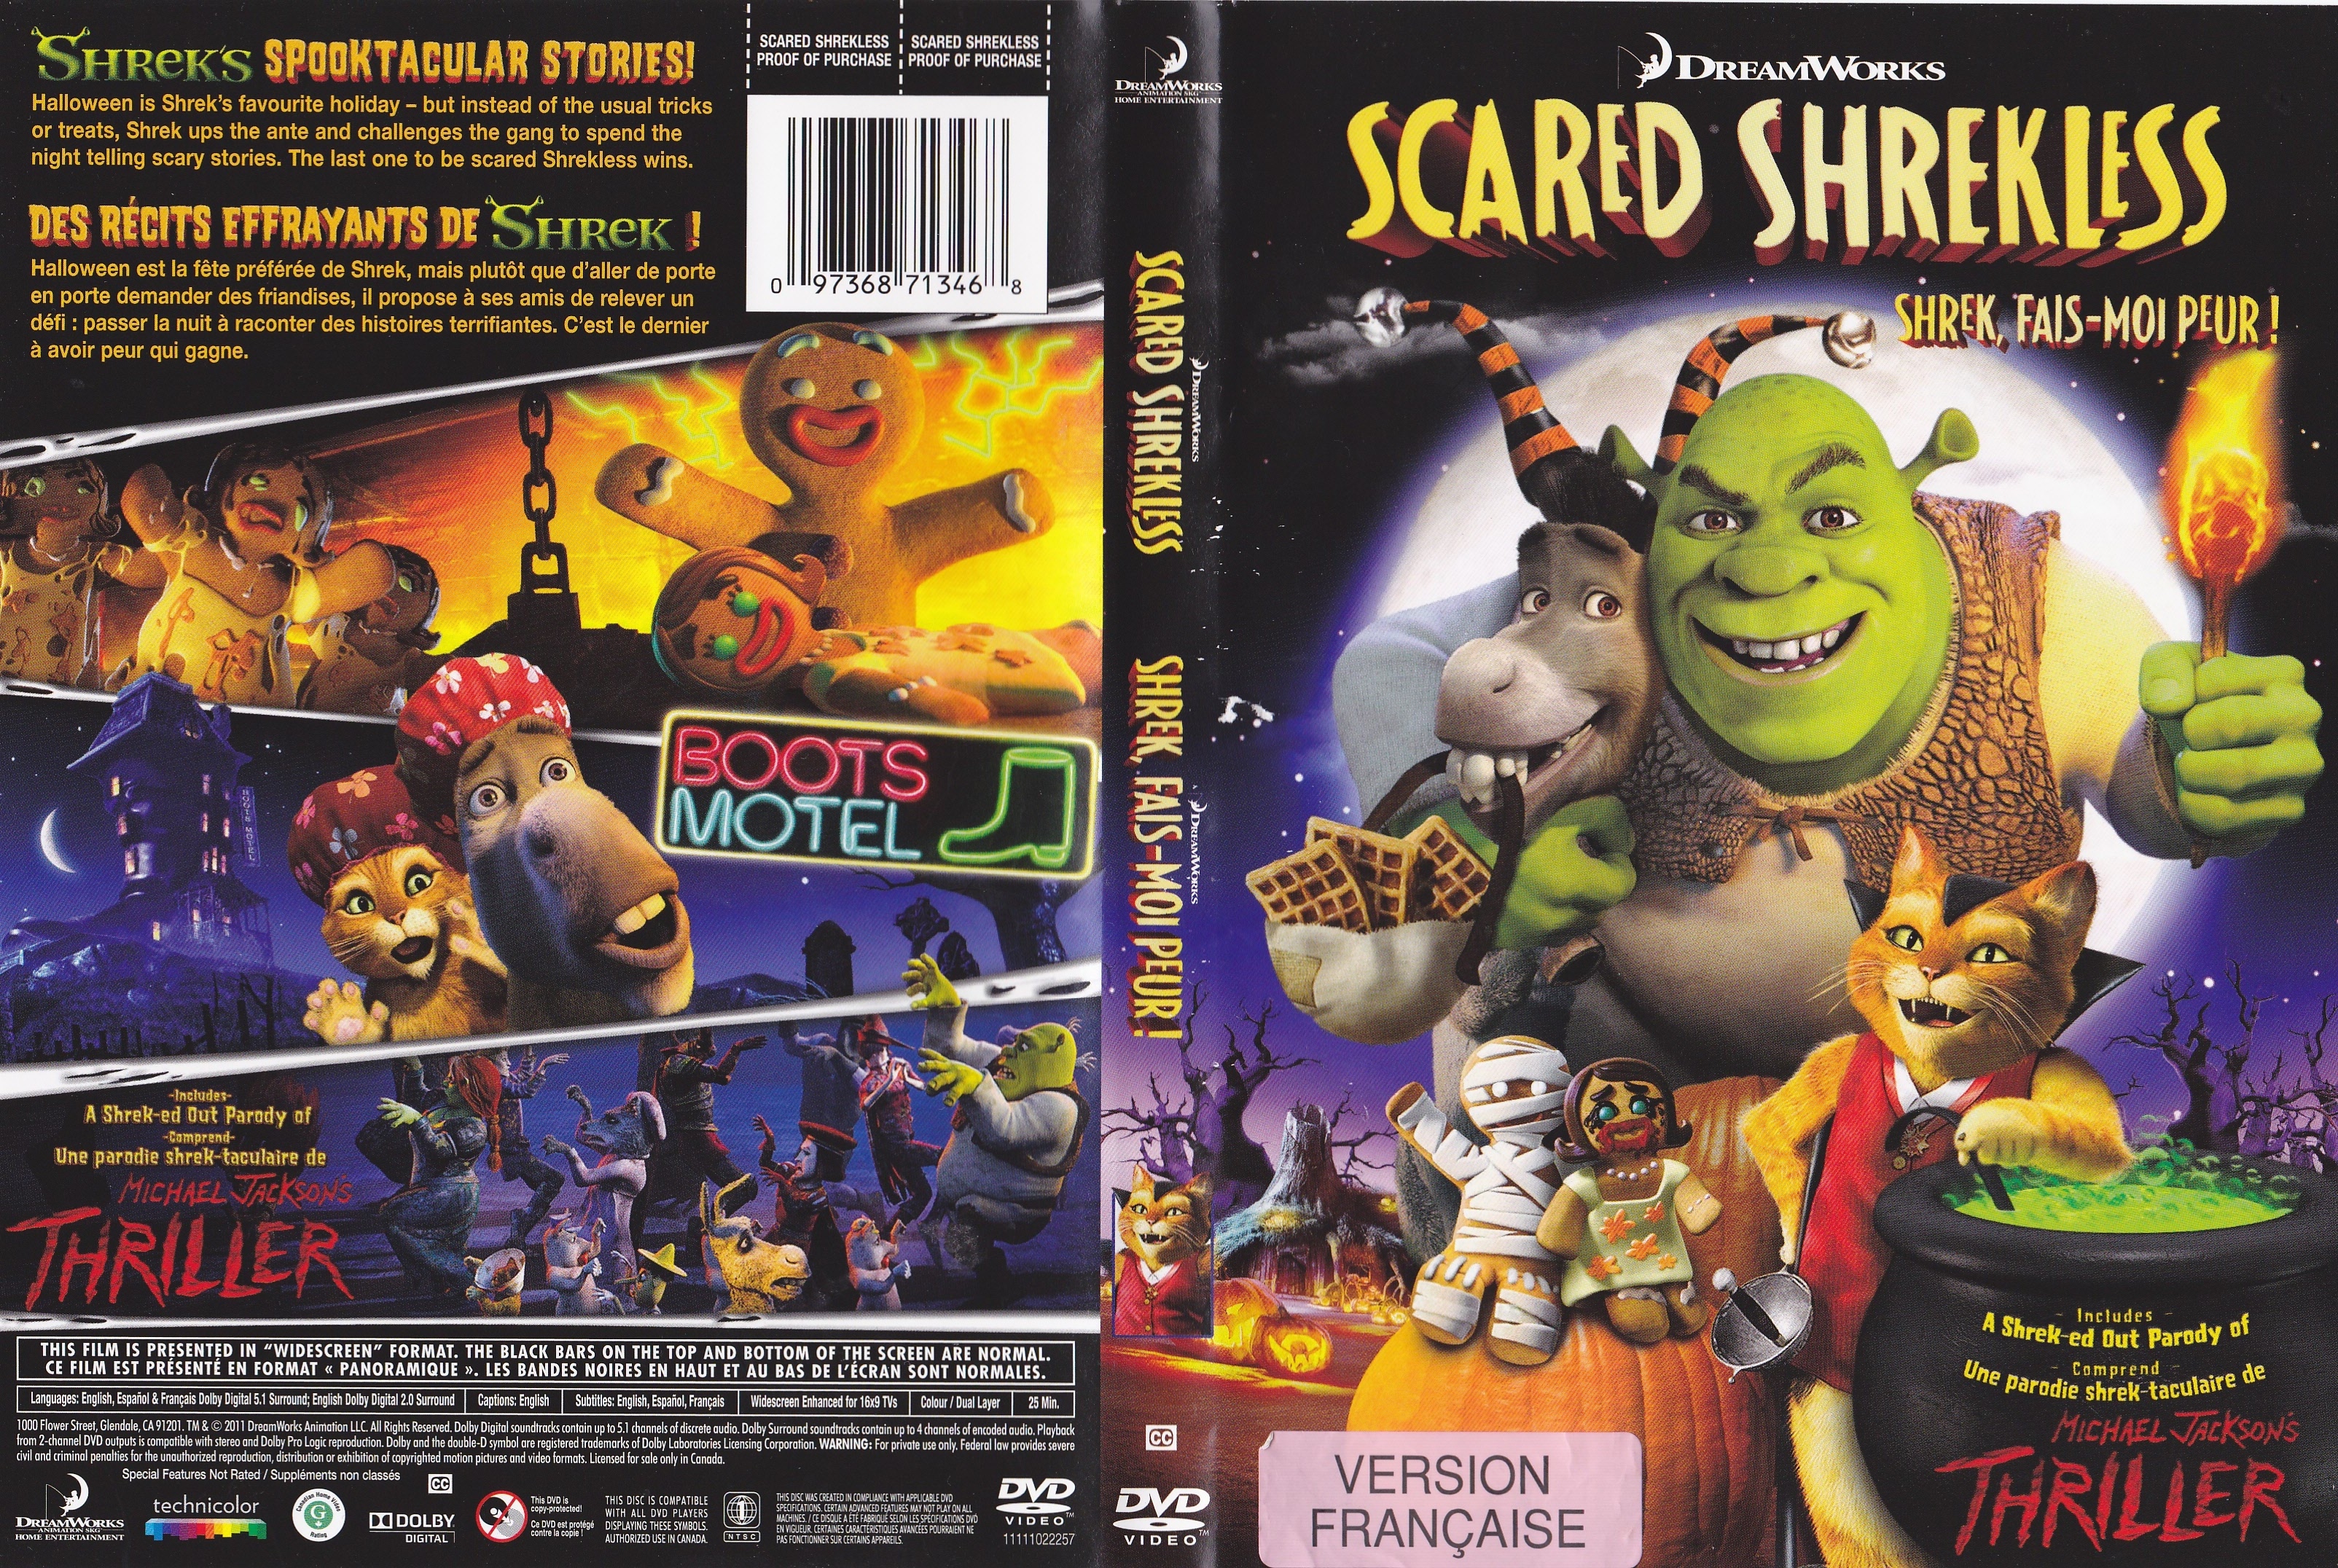 Jaquette DVD Shrek fait moi peur - Scared shrekless (Canadienne)